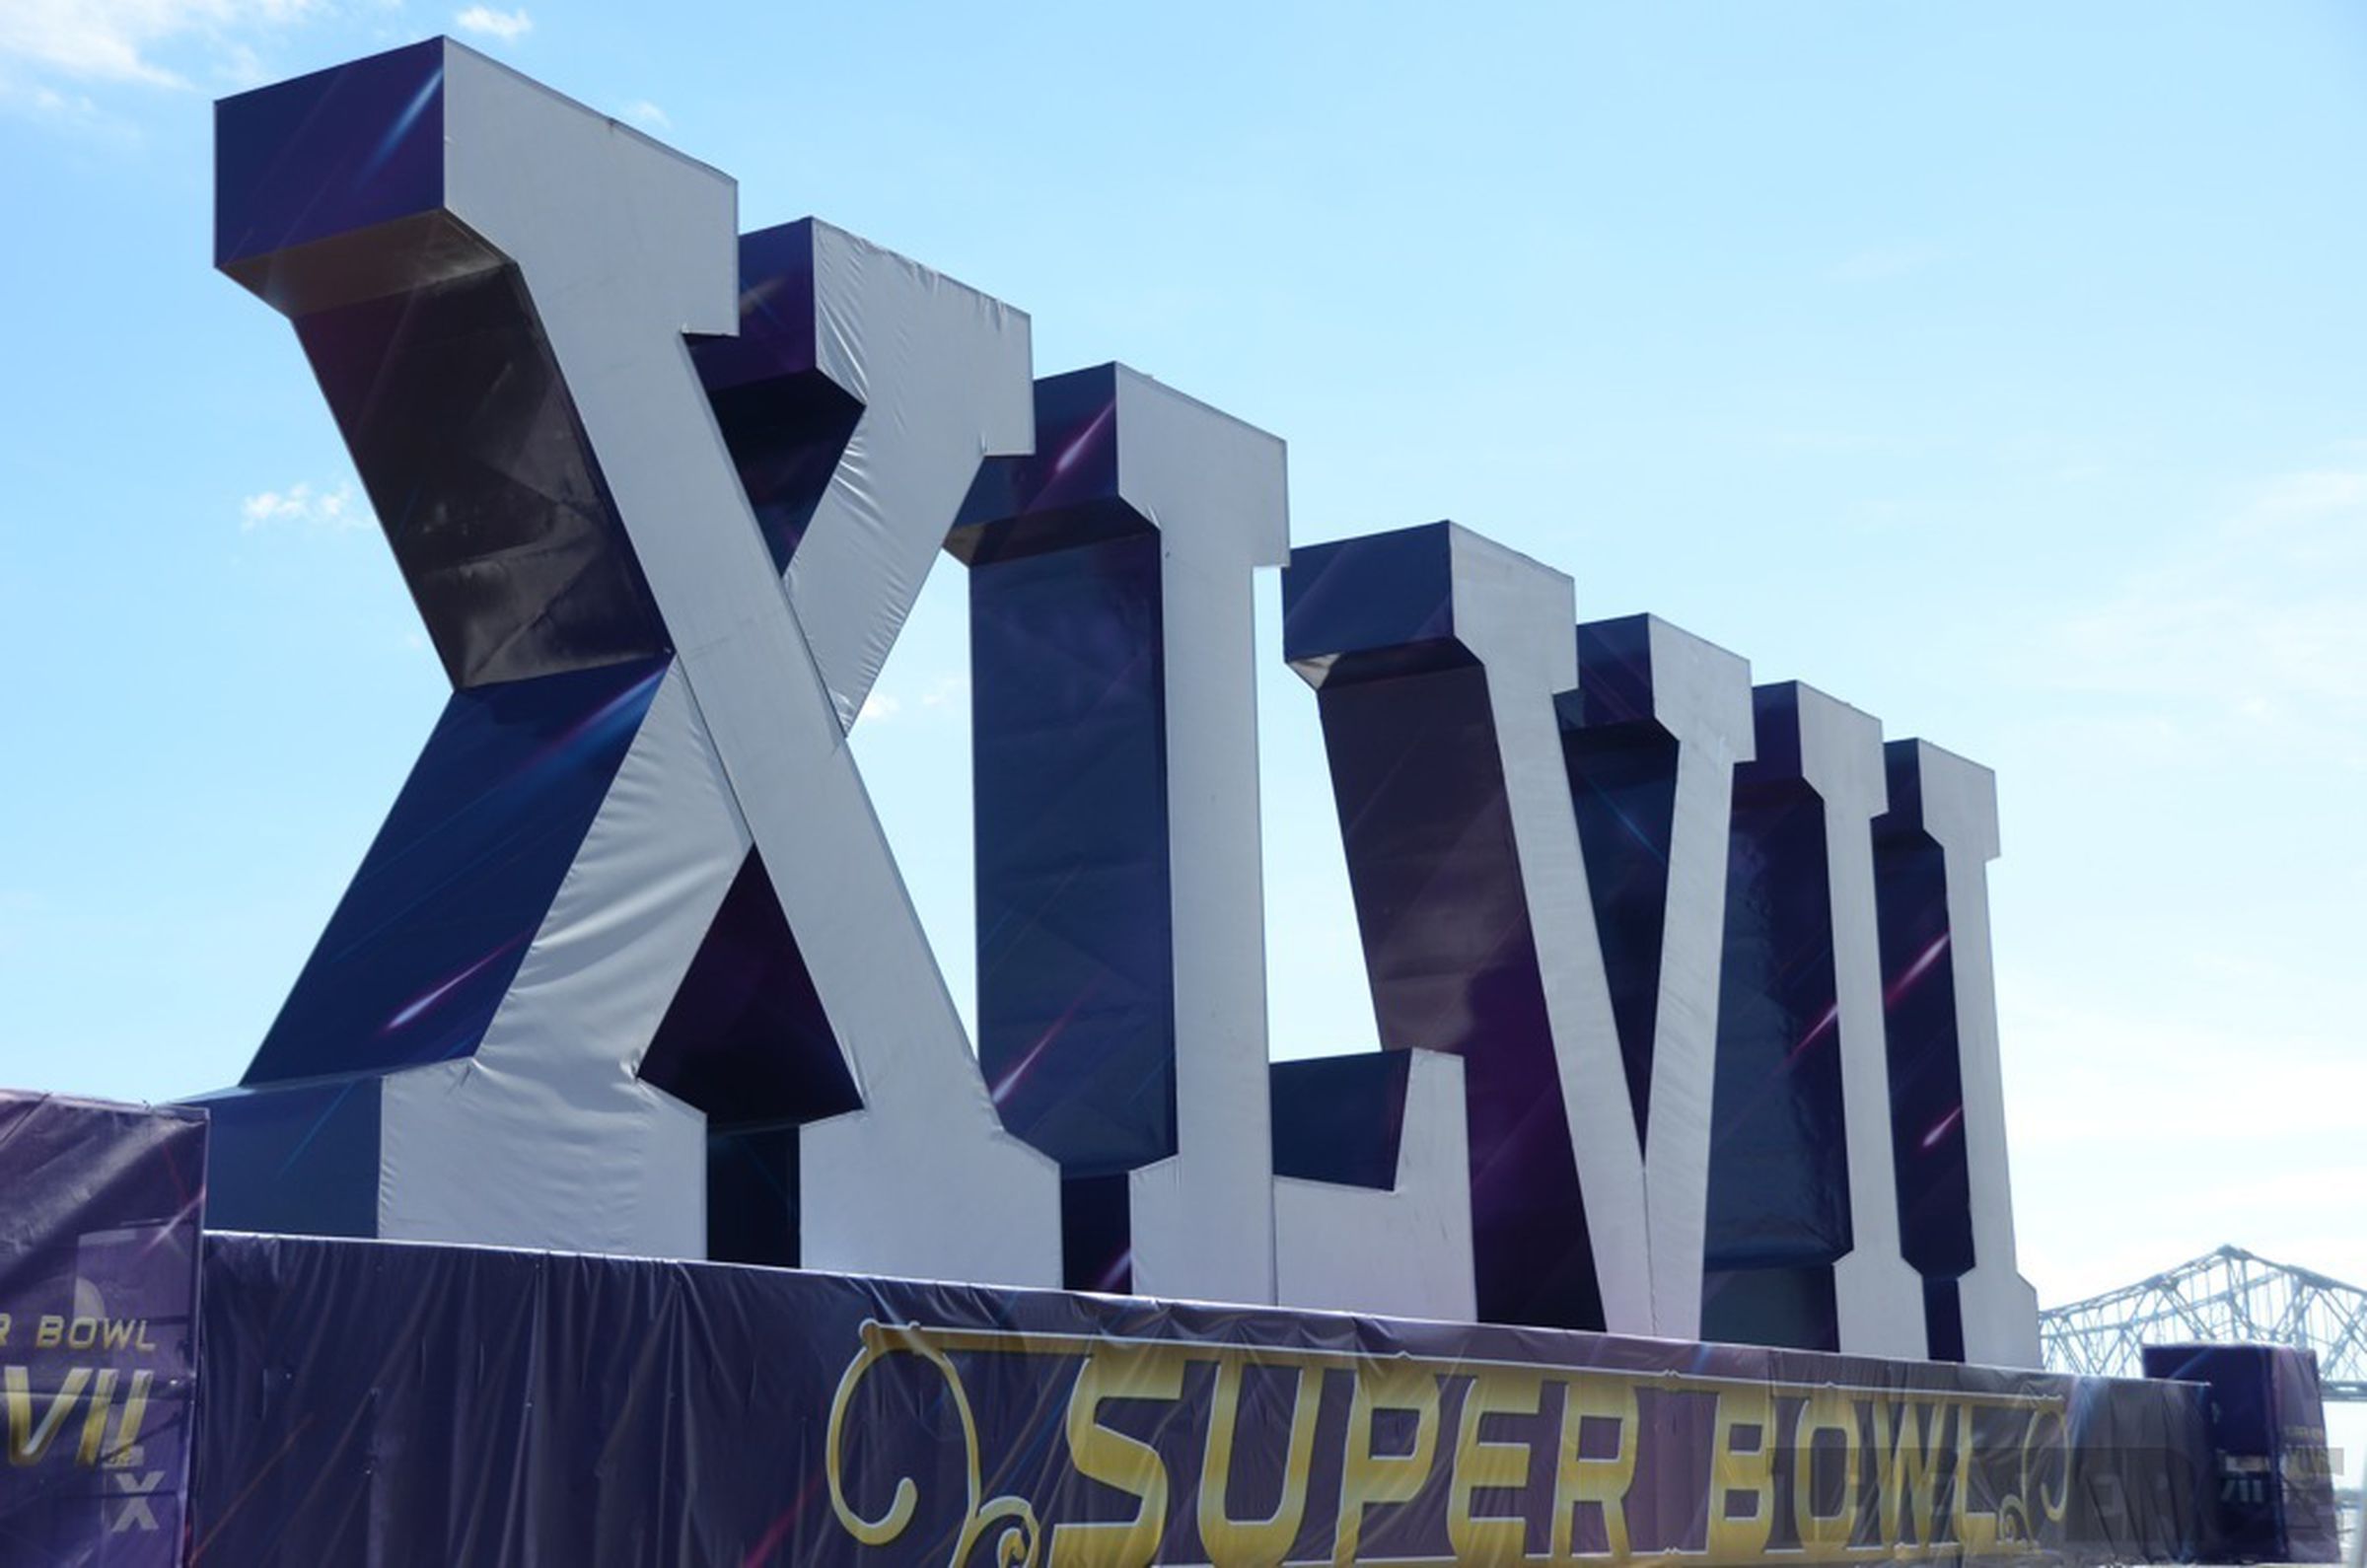 Super Bowl XLVII pictures